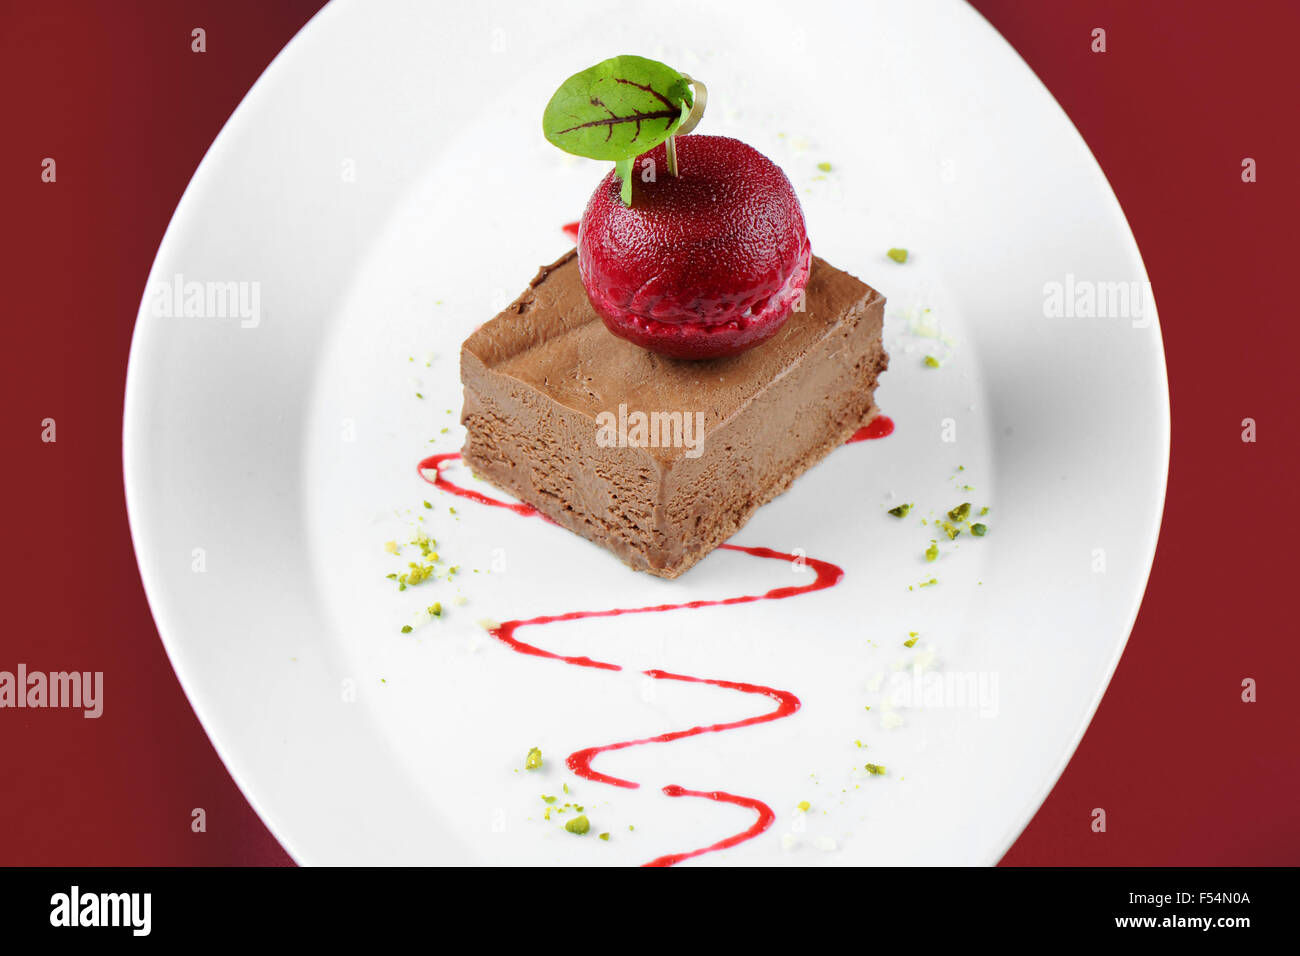 Gourmet chocolate mouse ice cream dessert with a dark cherry sorbet. Stock Photo